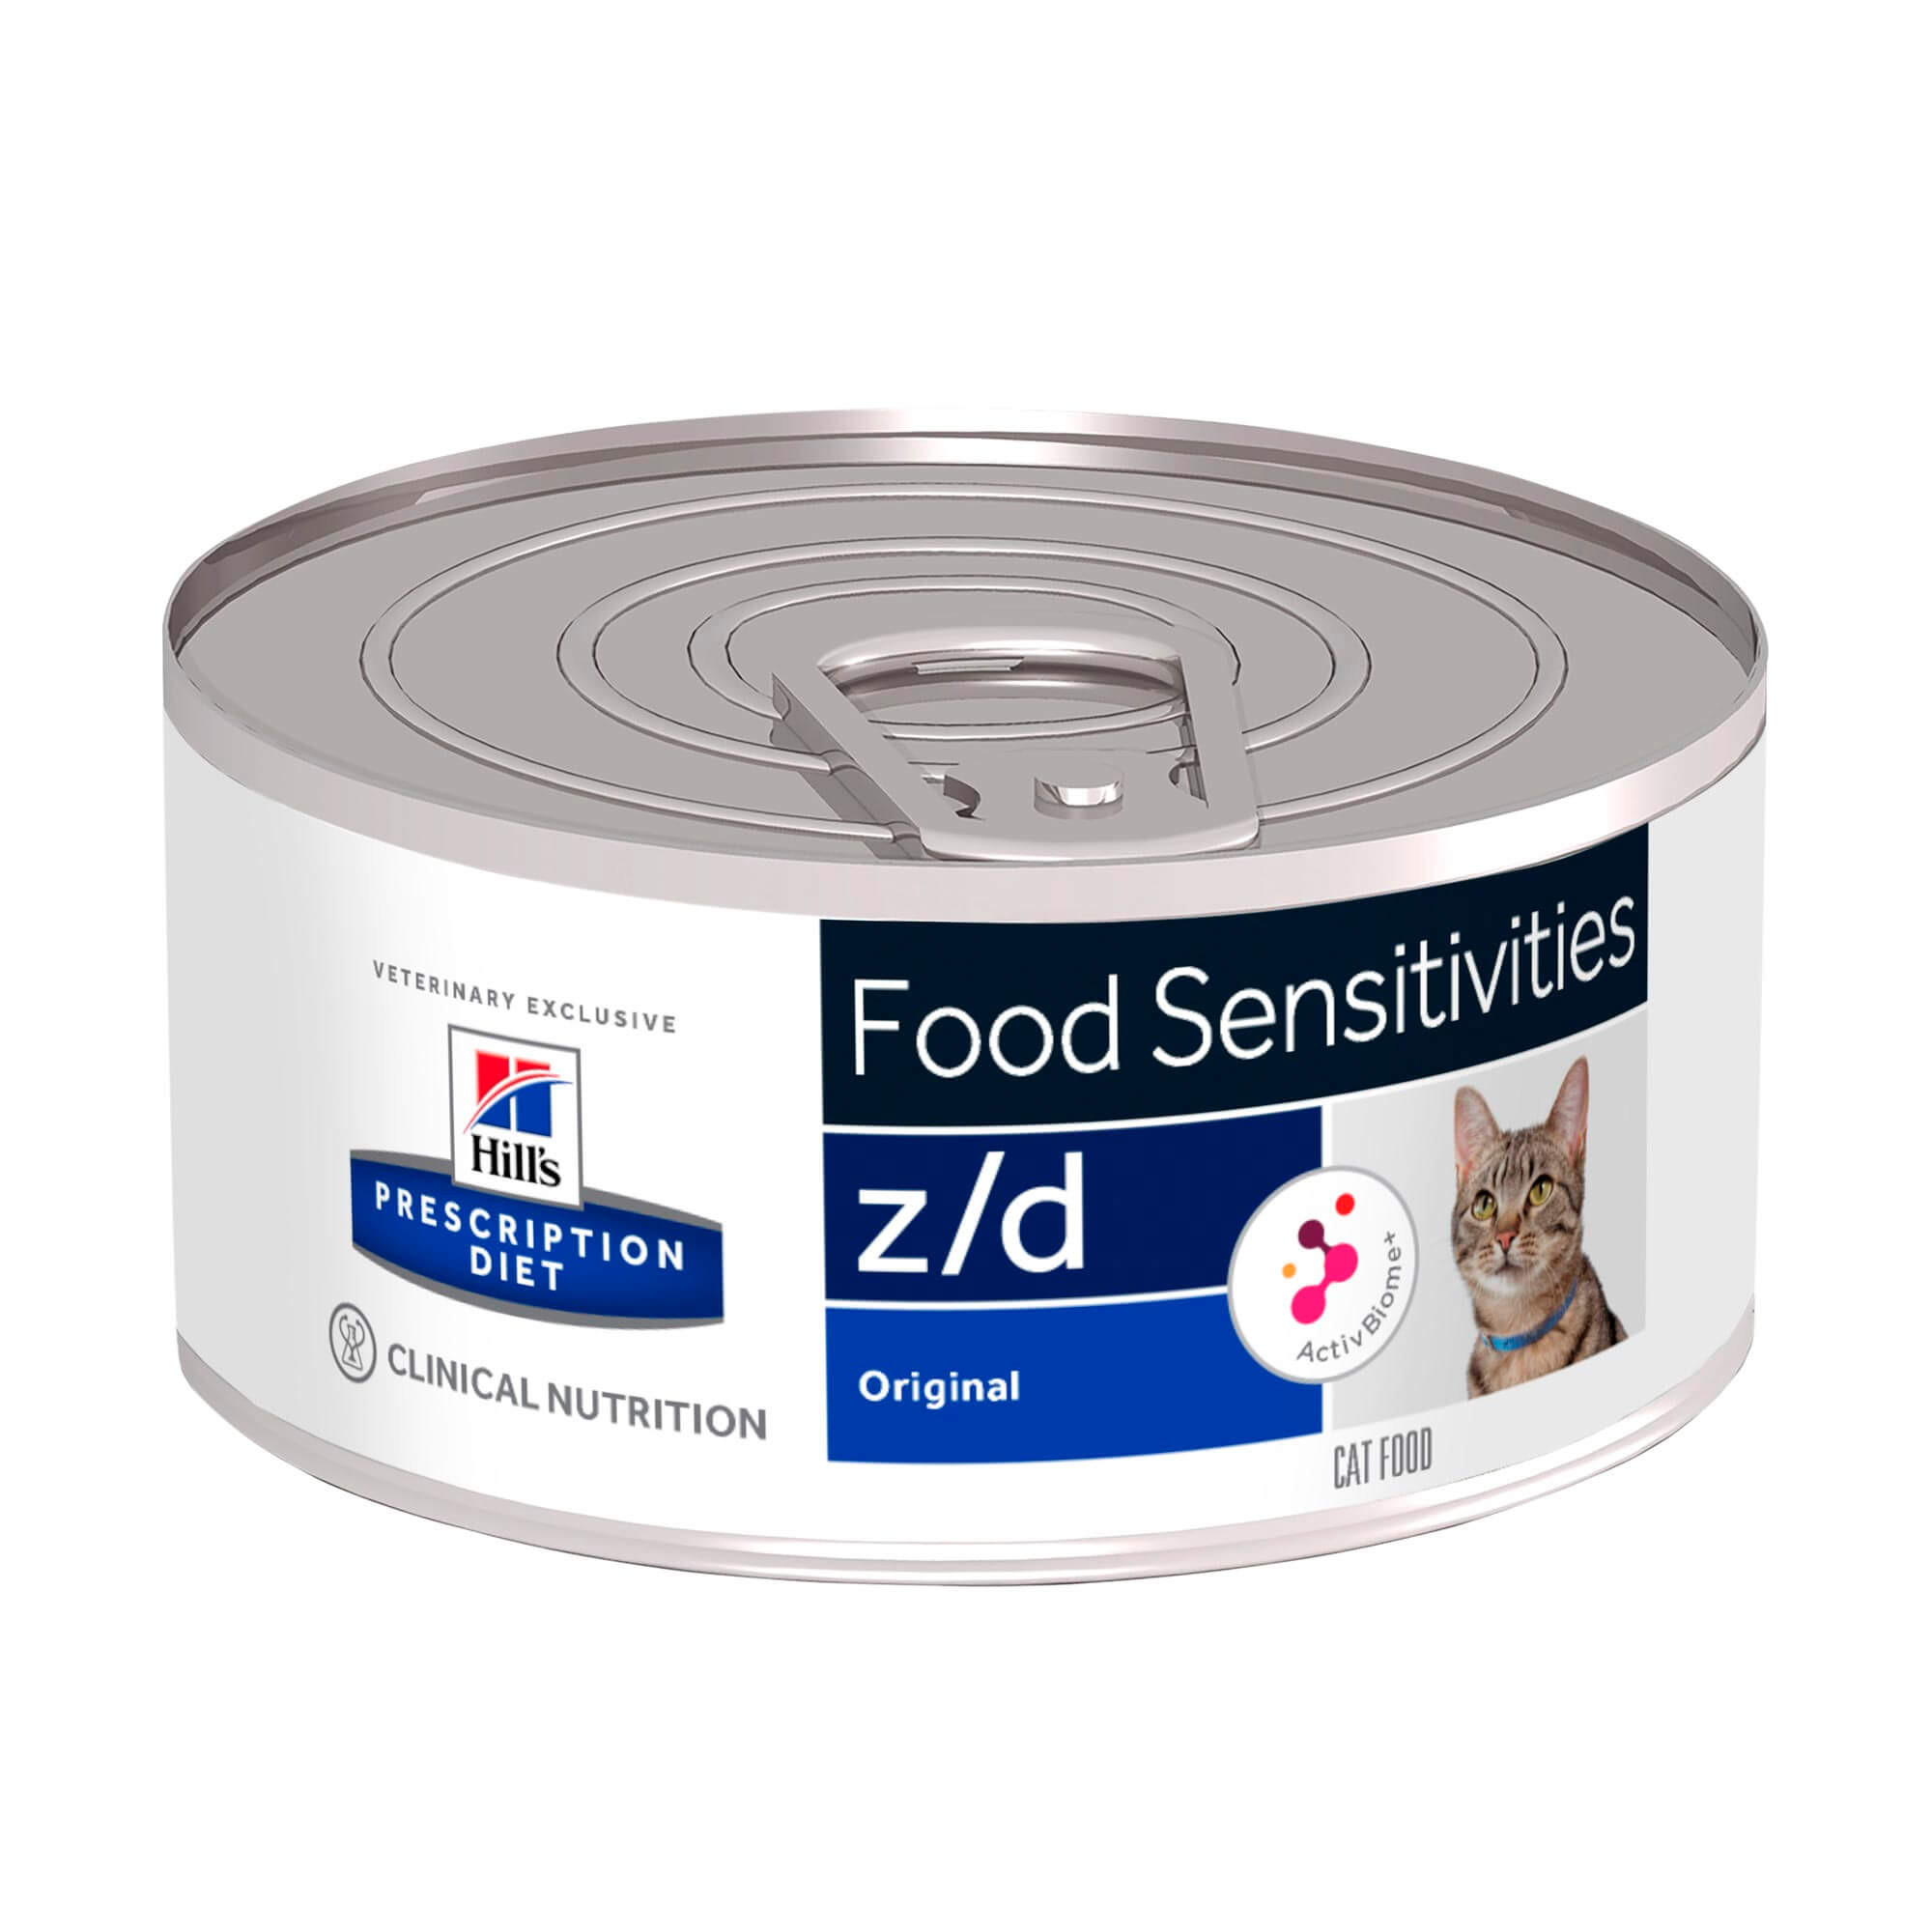 Hill's Prescription Z/D Food Sensitivities kattenvoer 156 g blik